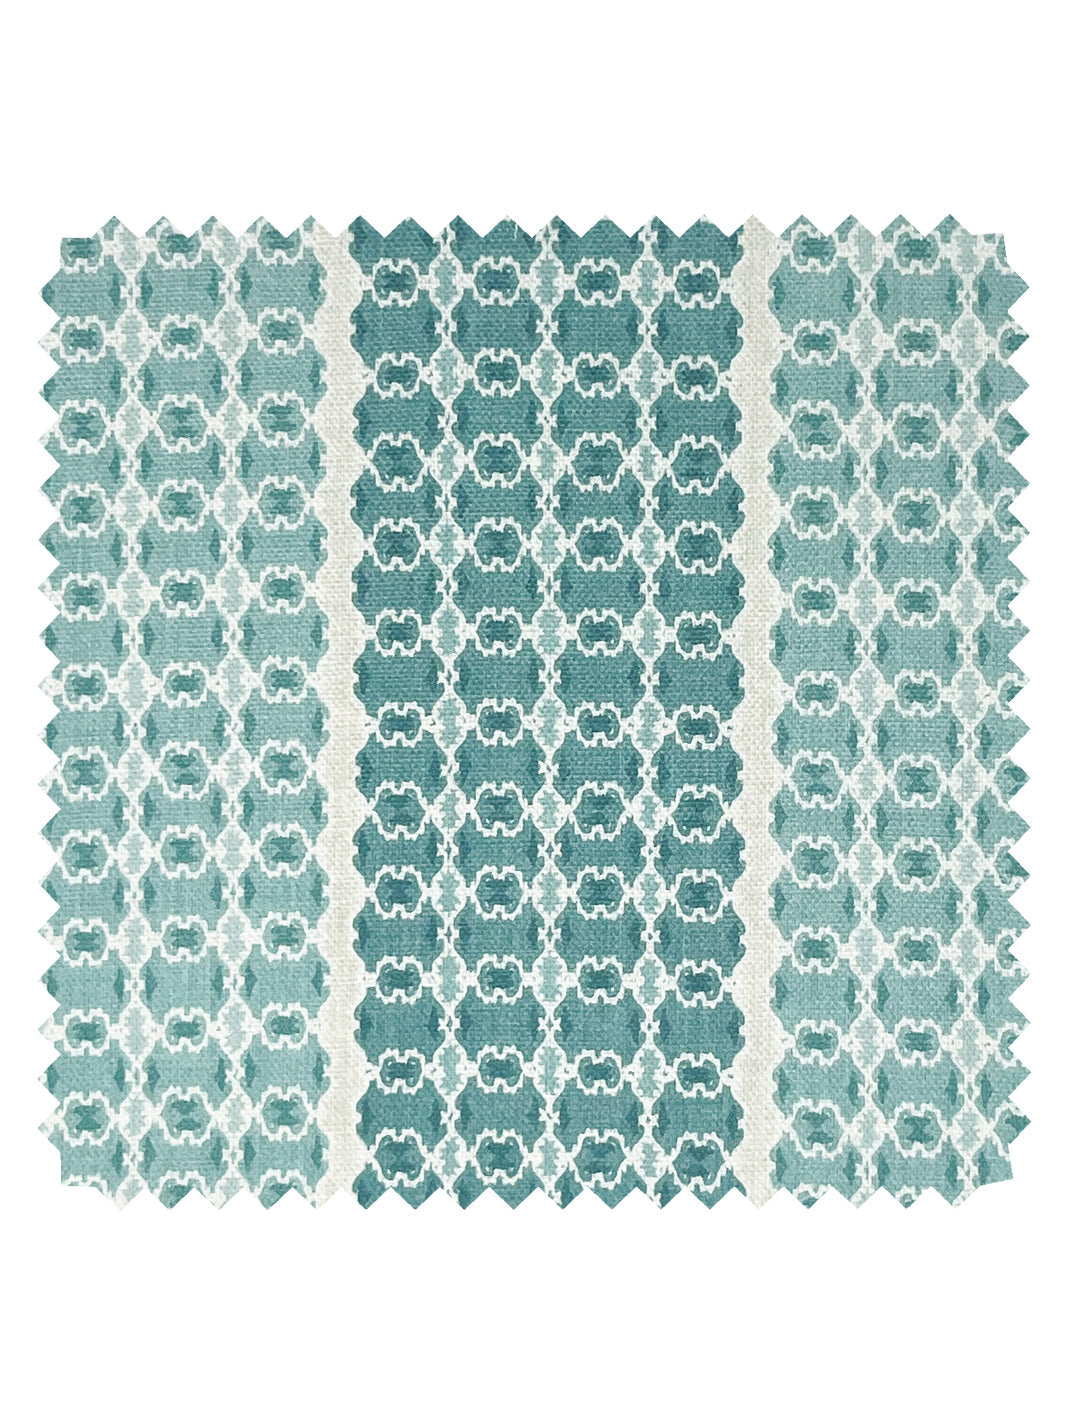 'Medallion Stripe' Linen Fabric by Nathan Turner - Seafoam